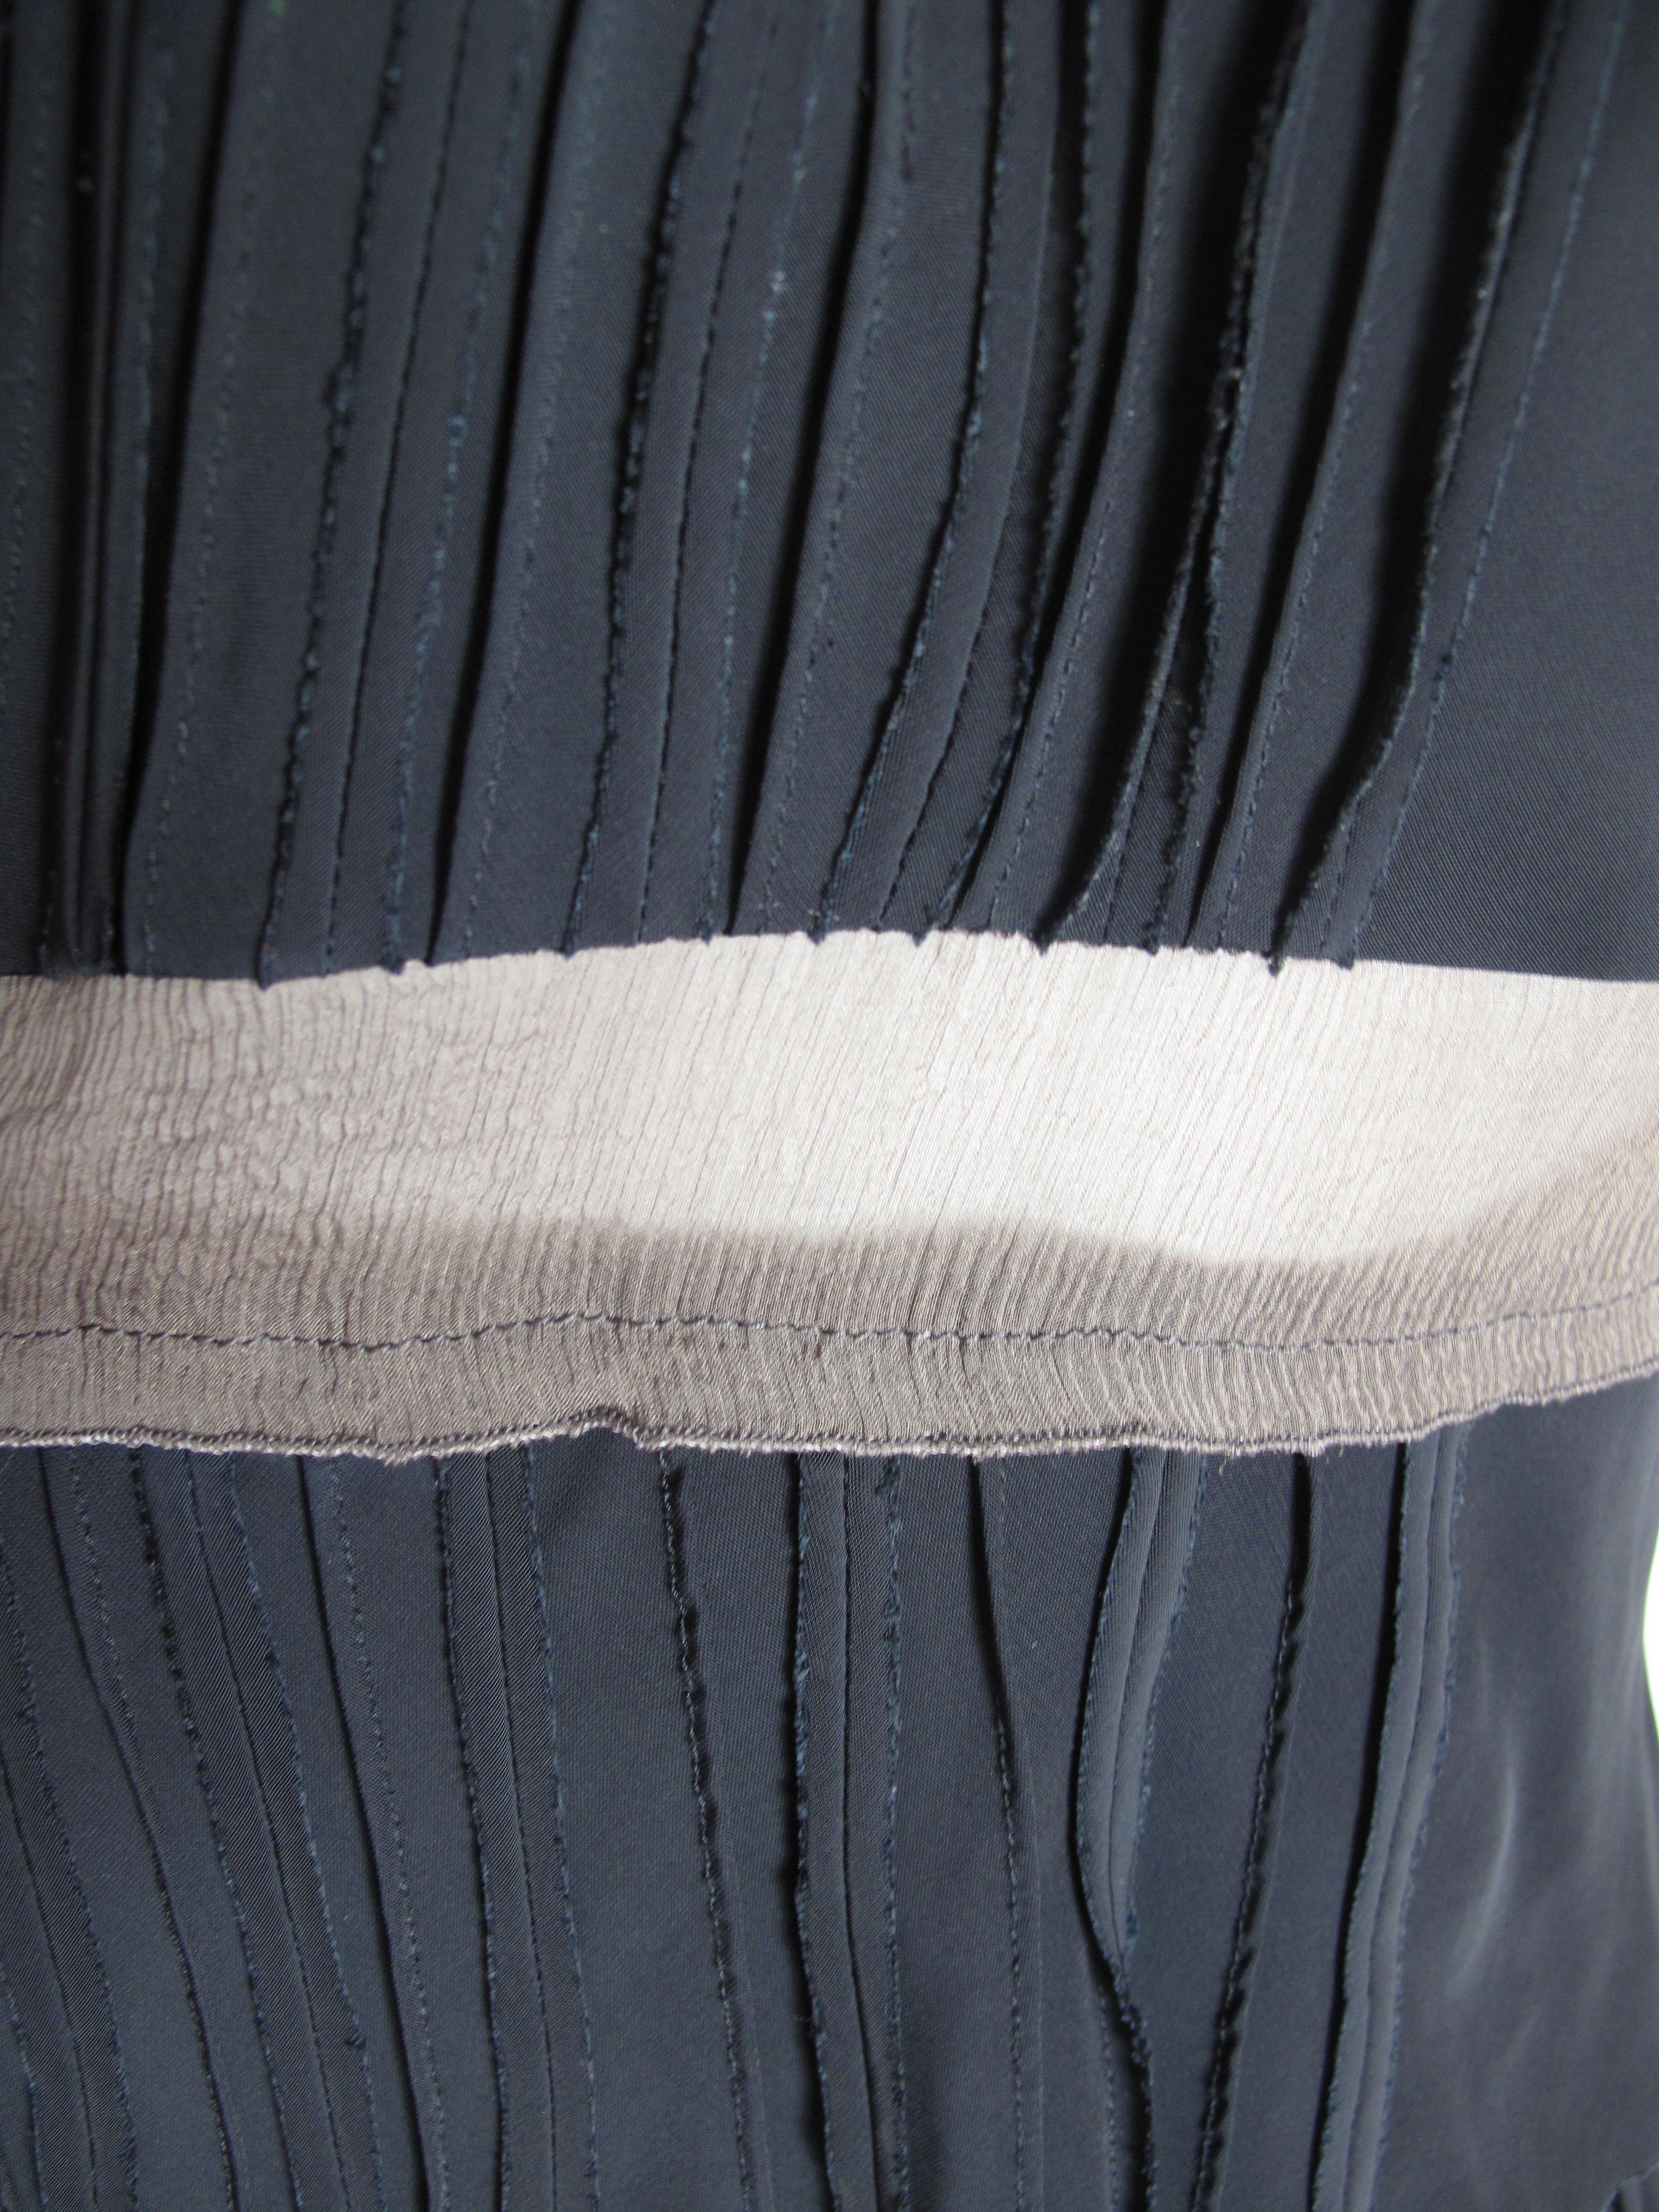 Black Prada silk top and skirt, 1990s